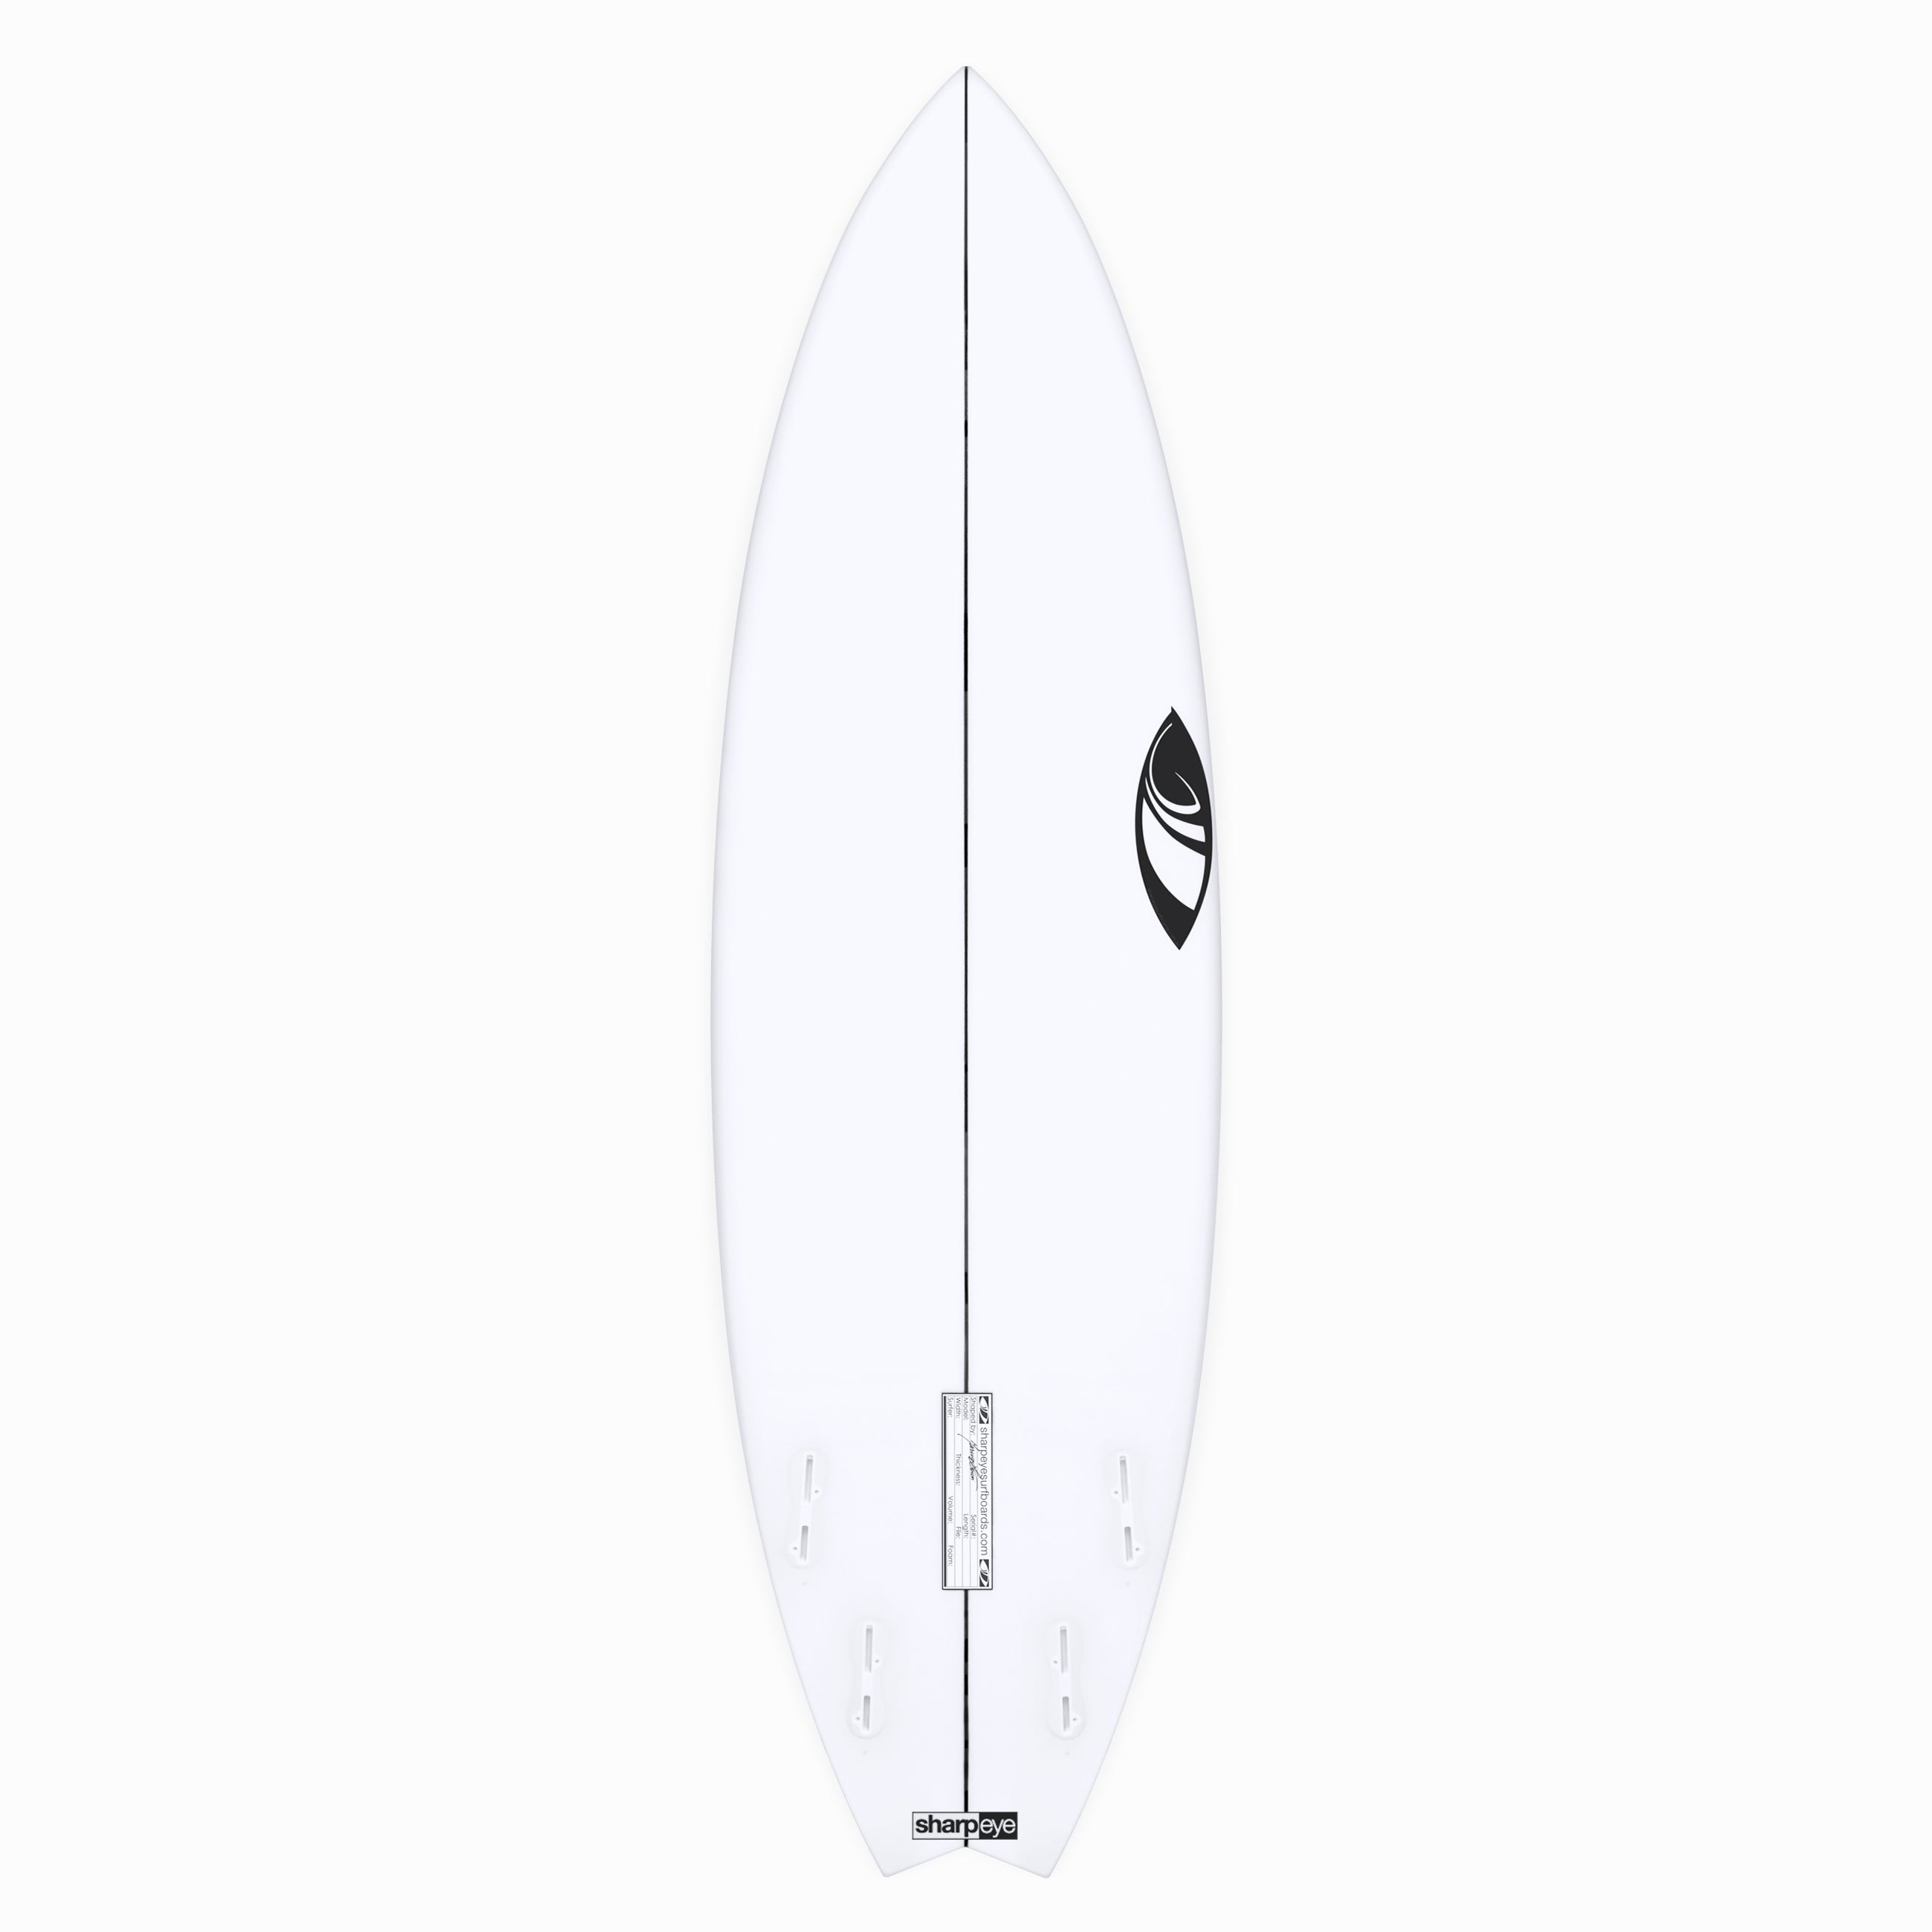 INFERNO FT Surfboard | Sharp Eye Surfboards